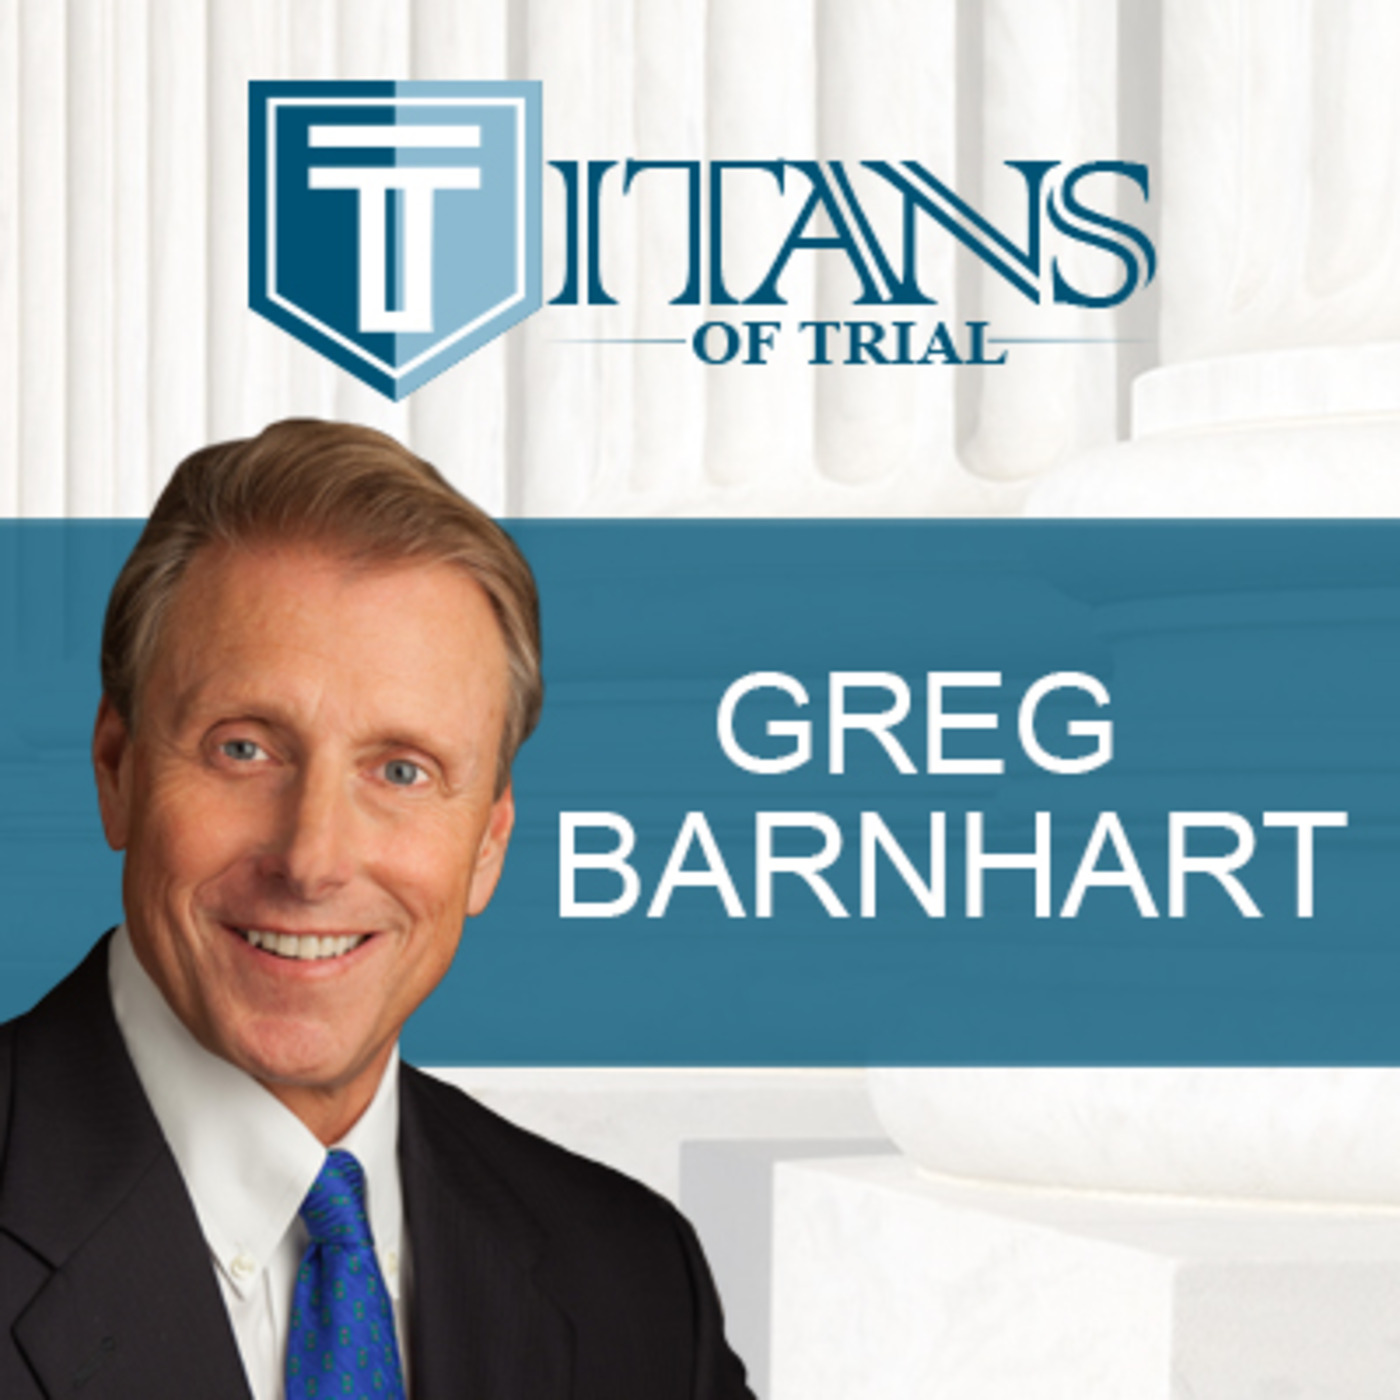 Titans of Trial – Greg Barnhart